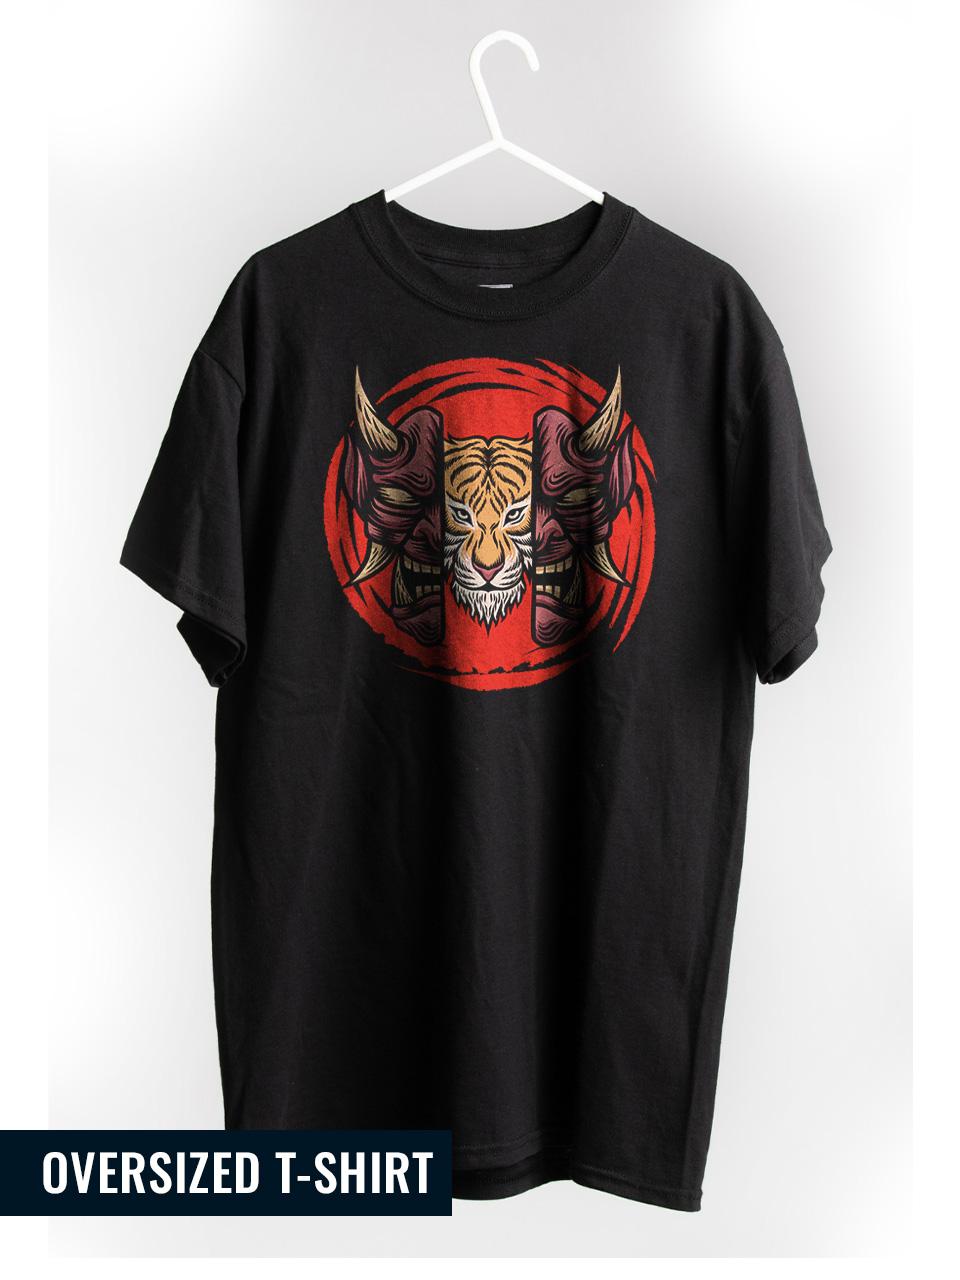 TigerMonster Roar Oversized T-Shirt